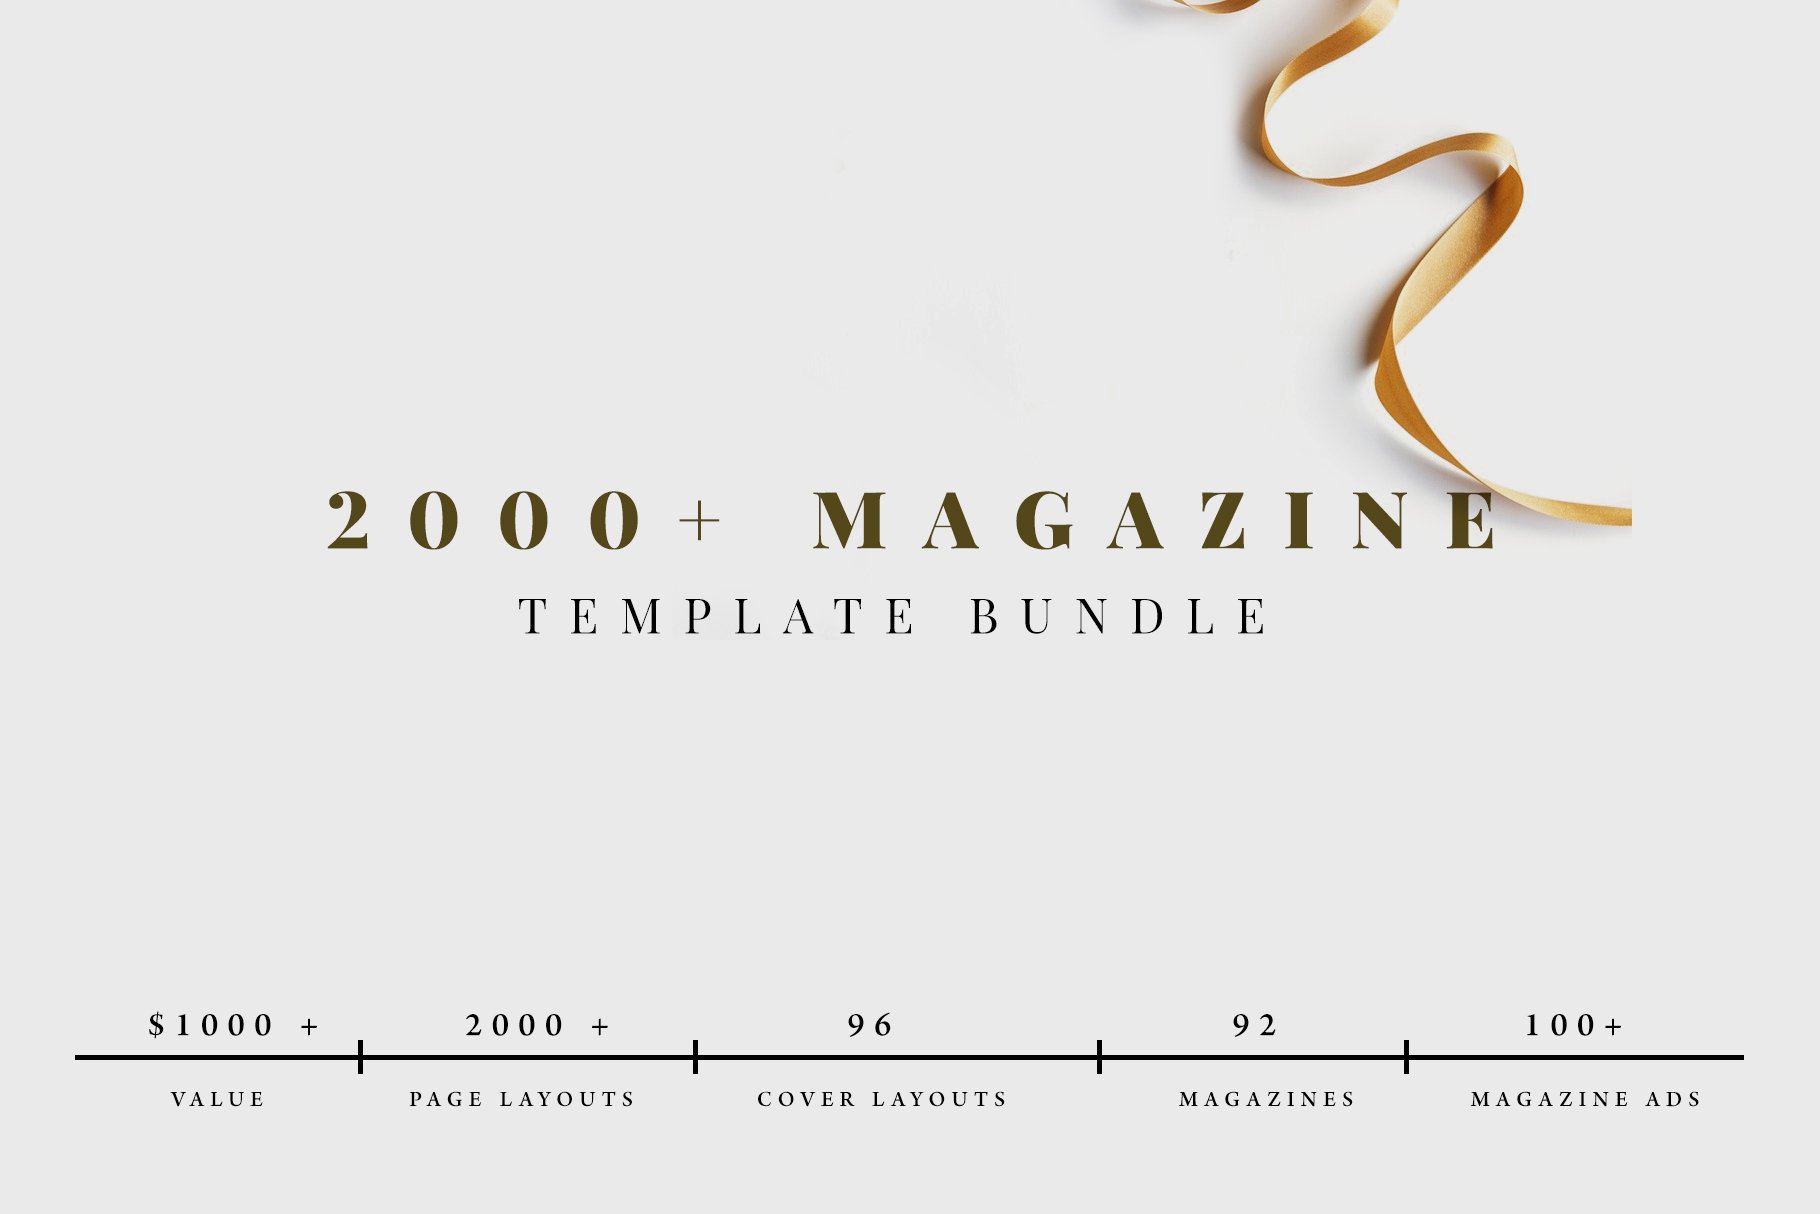 2000+ Magazine Bundle - 97% Off cover image.